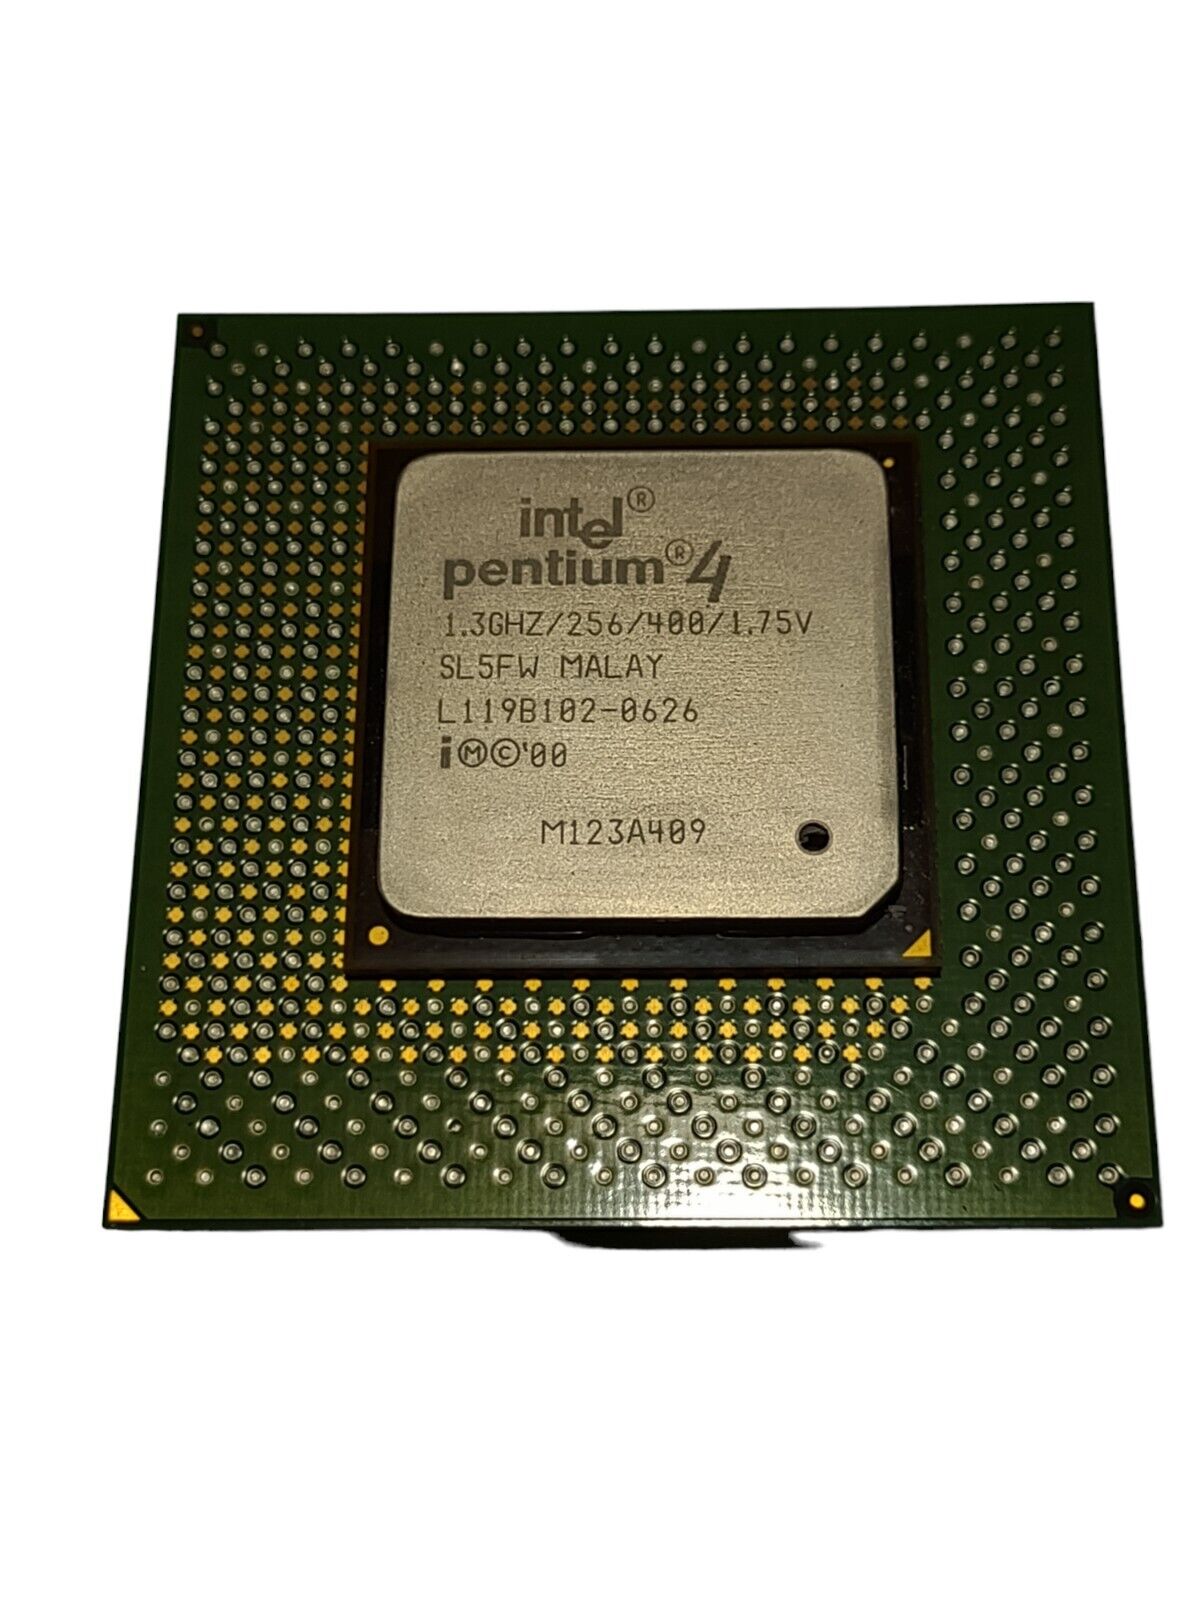 VINTAGE Intel pentium 4 Processor 1.3 256 400 1.75v  SL5FW